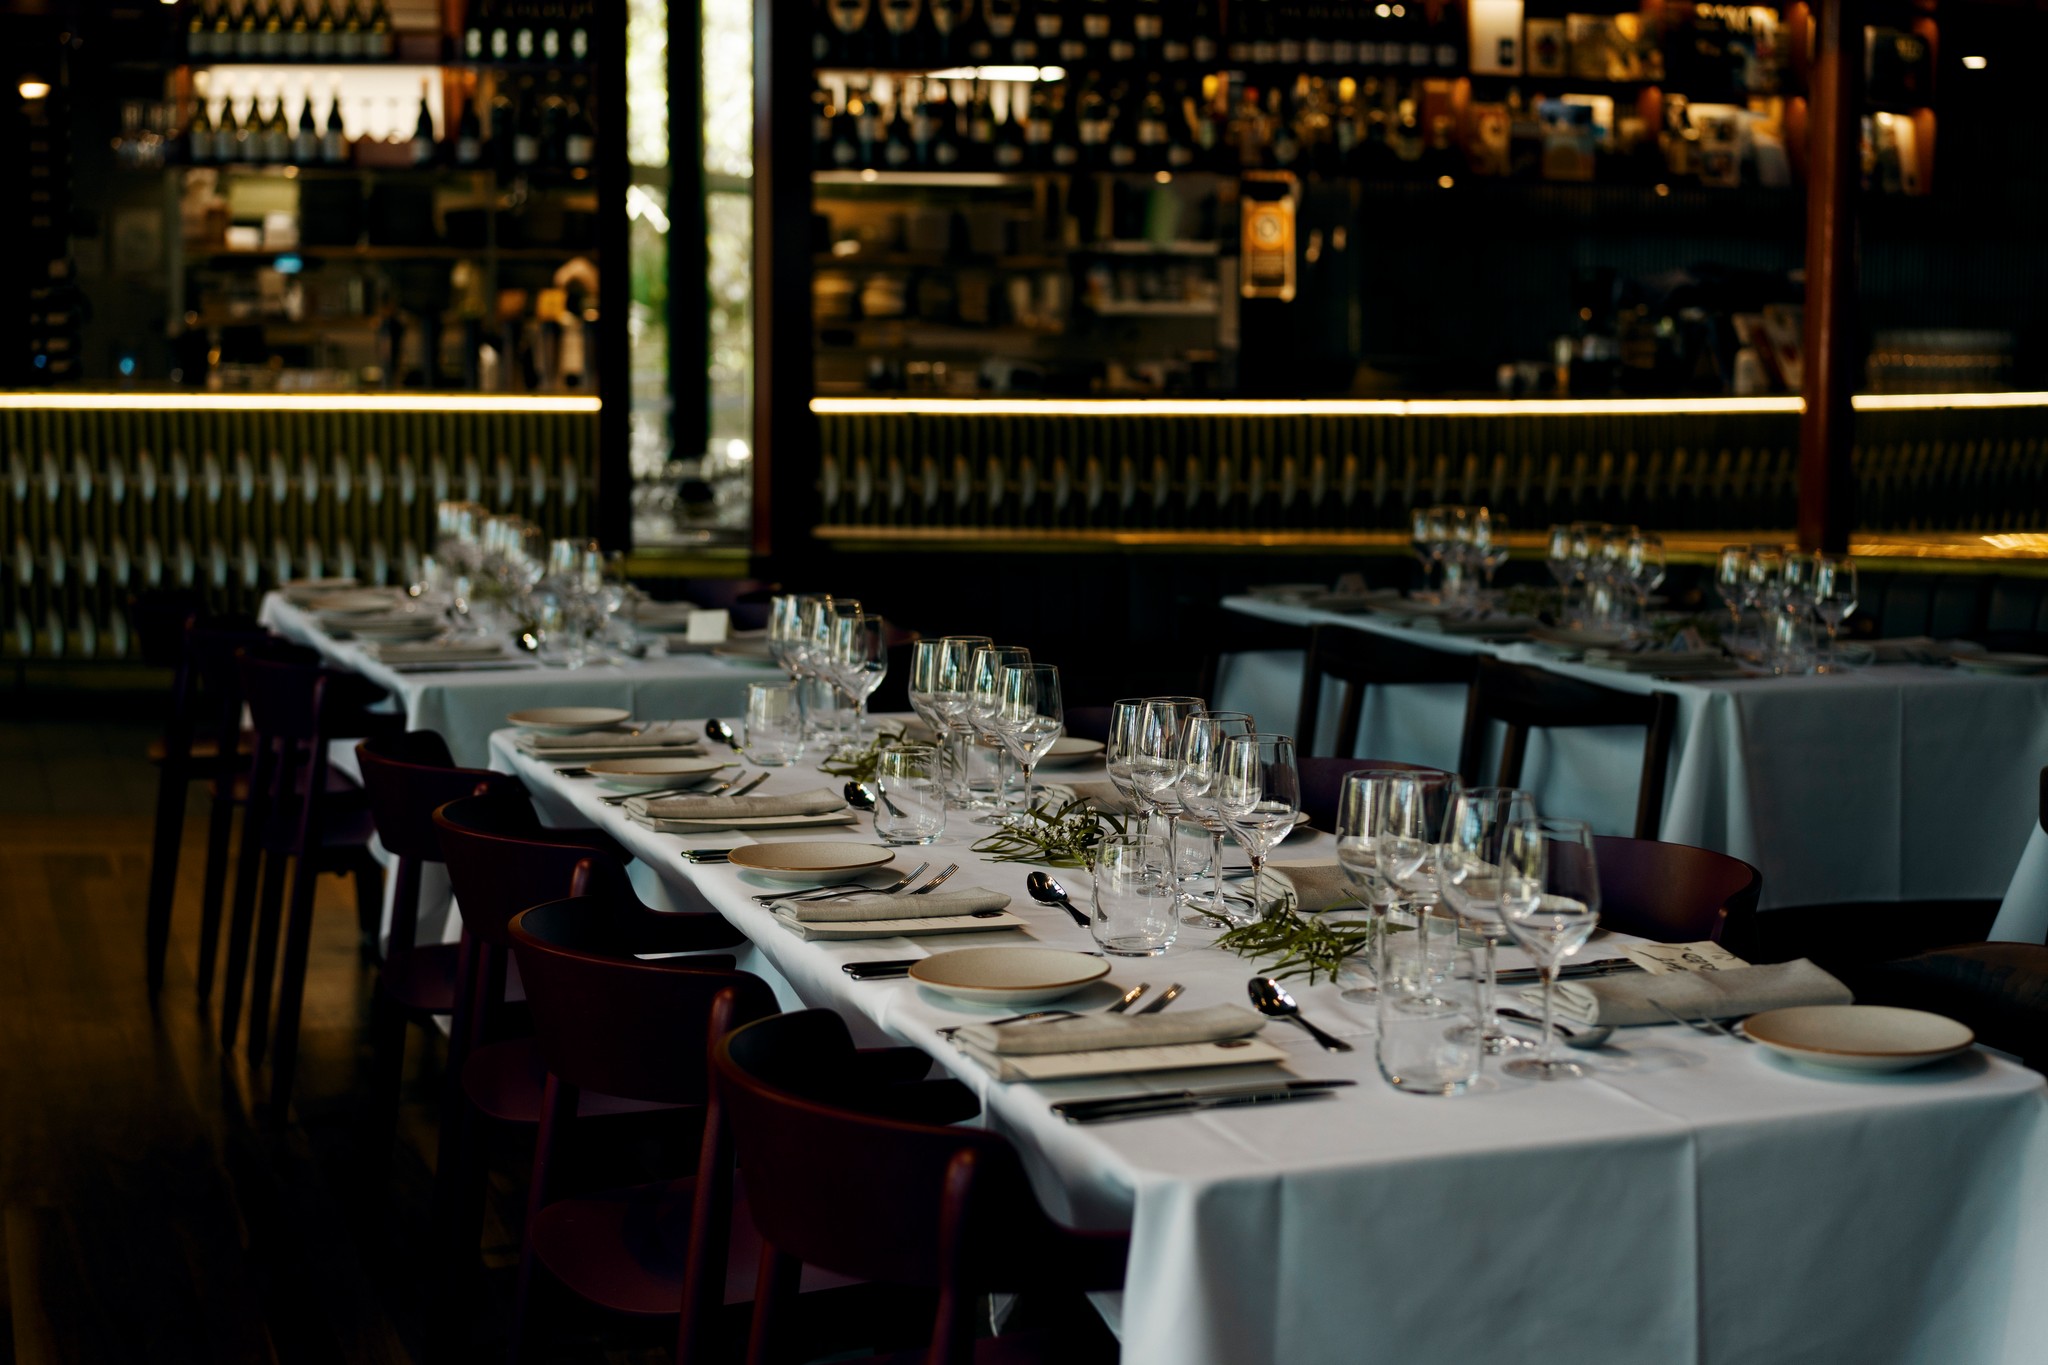 Fine dining restaurant set for a private de iuliis wine event